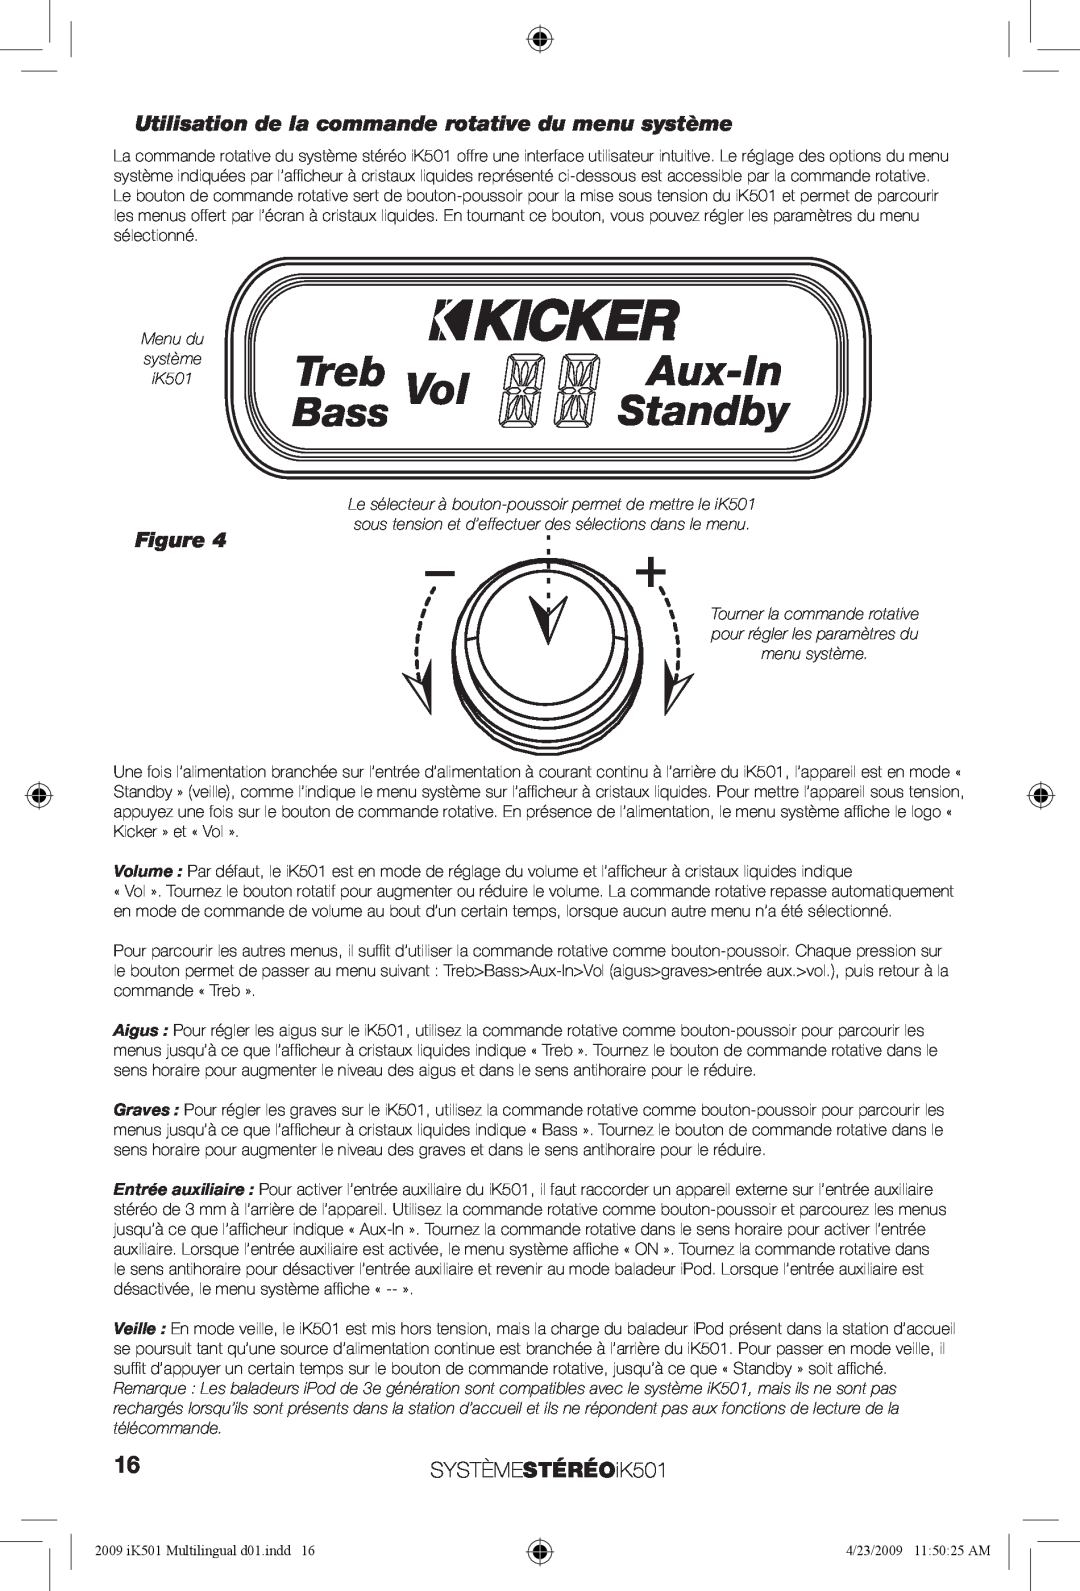 Kicker manual Treb, Aux-In, Standby, Bass, SYSTÈMESTÉRÉOiK501 